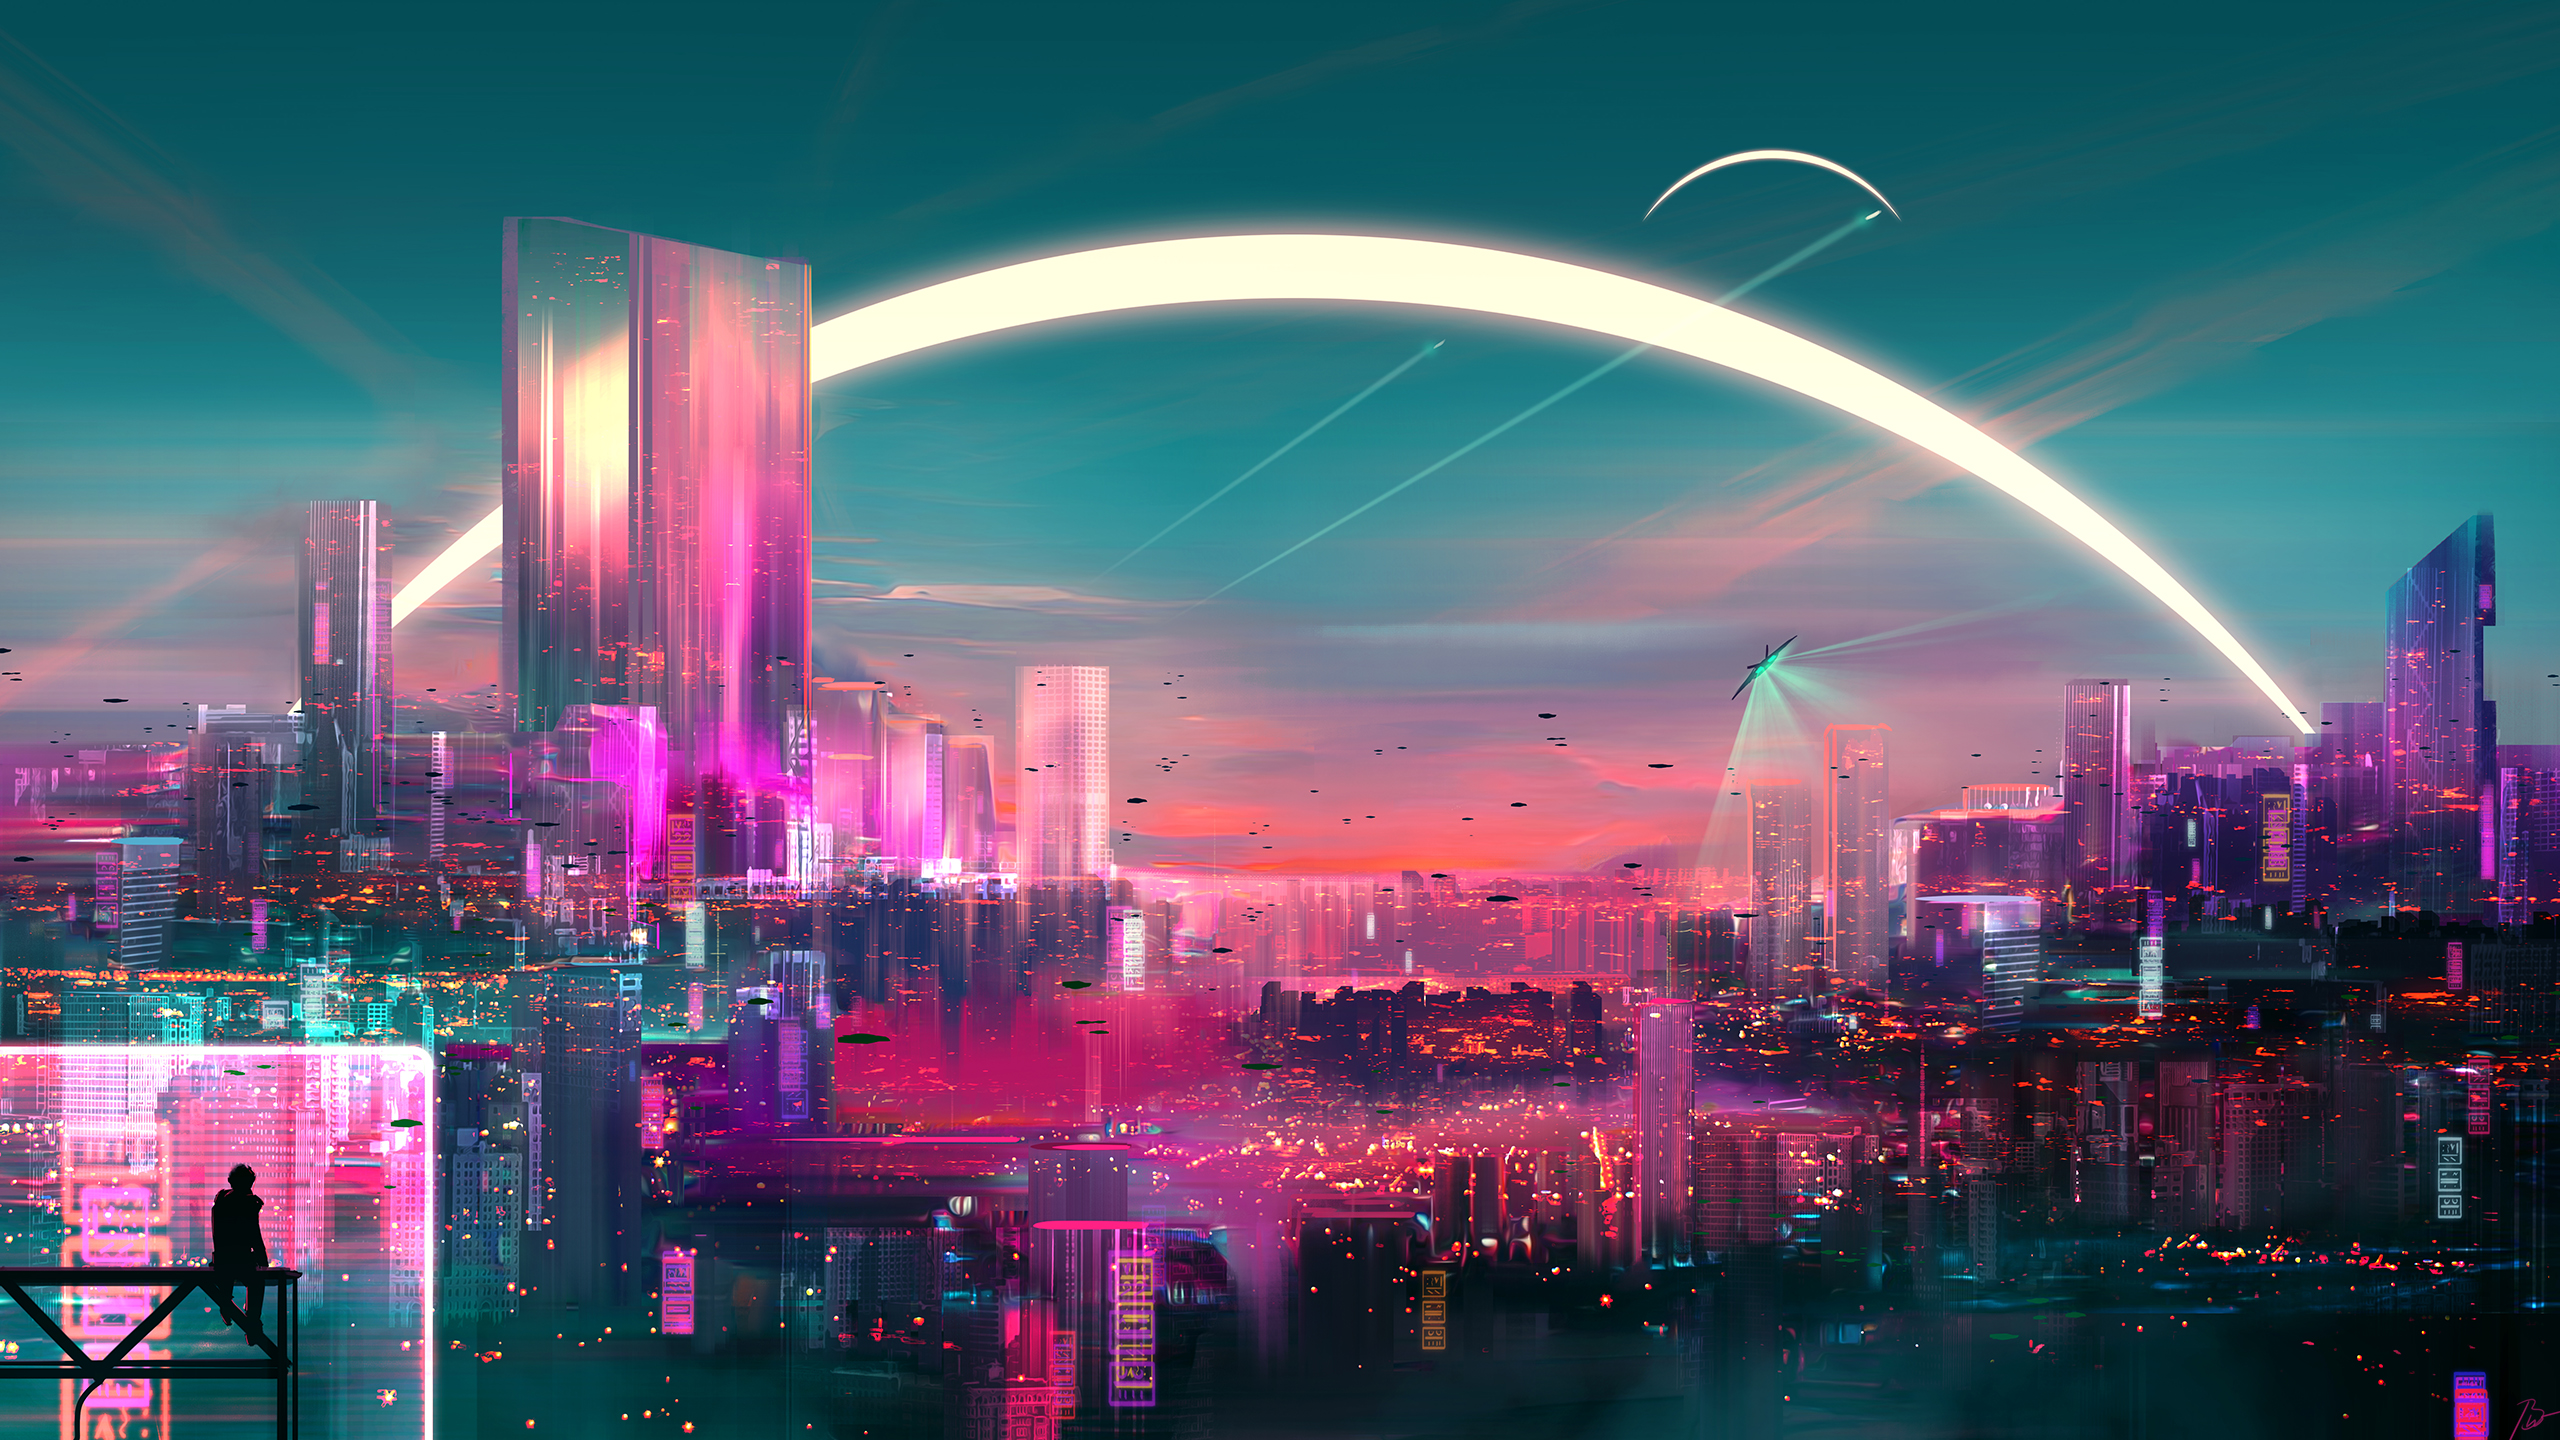 General 2560x1440 JoeyJazz cityscape science fiction fantasy art futuristic city digital art